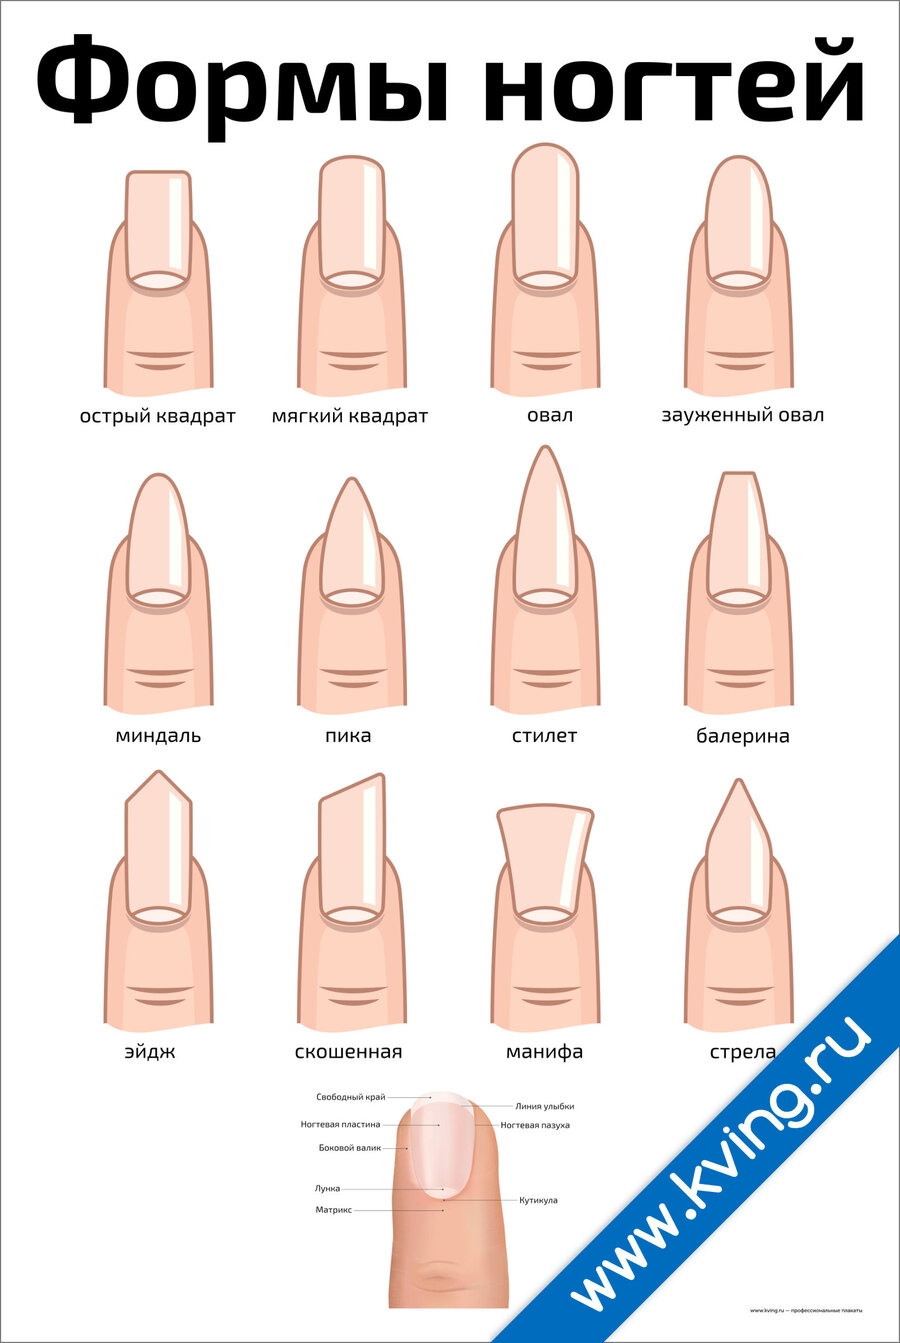 Популярная форма ногтей